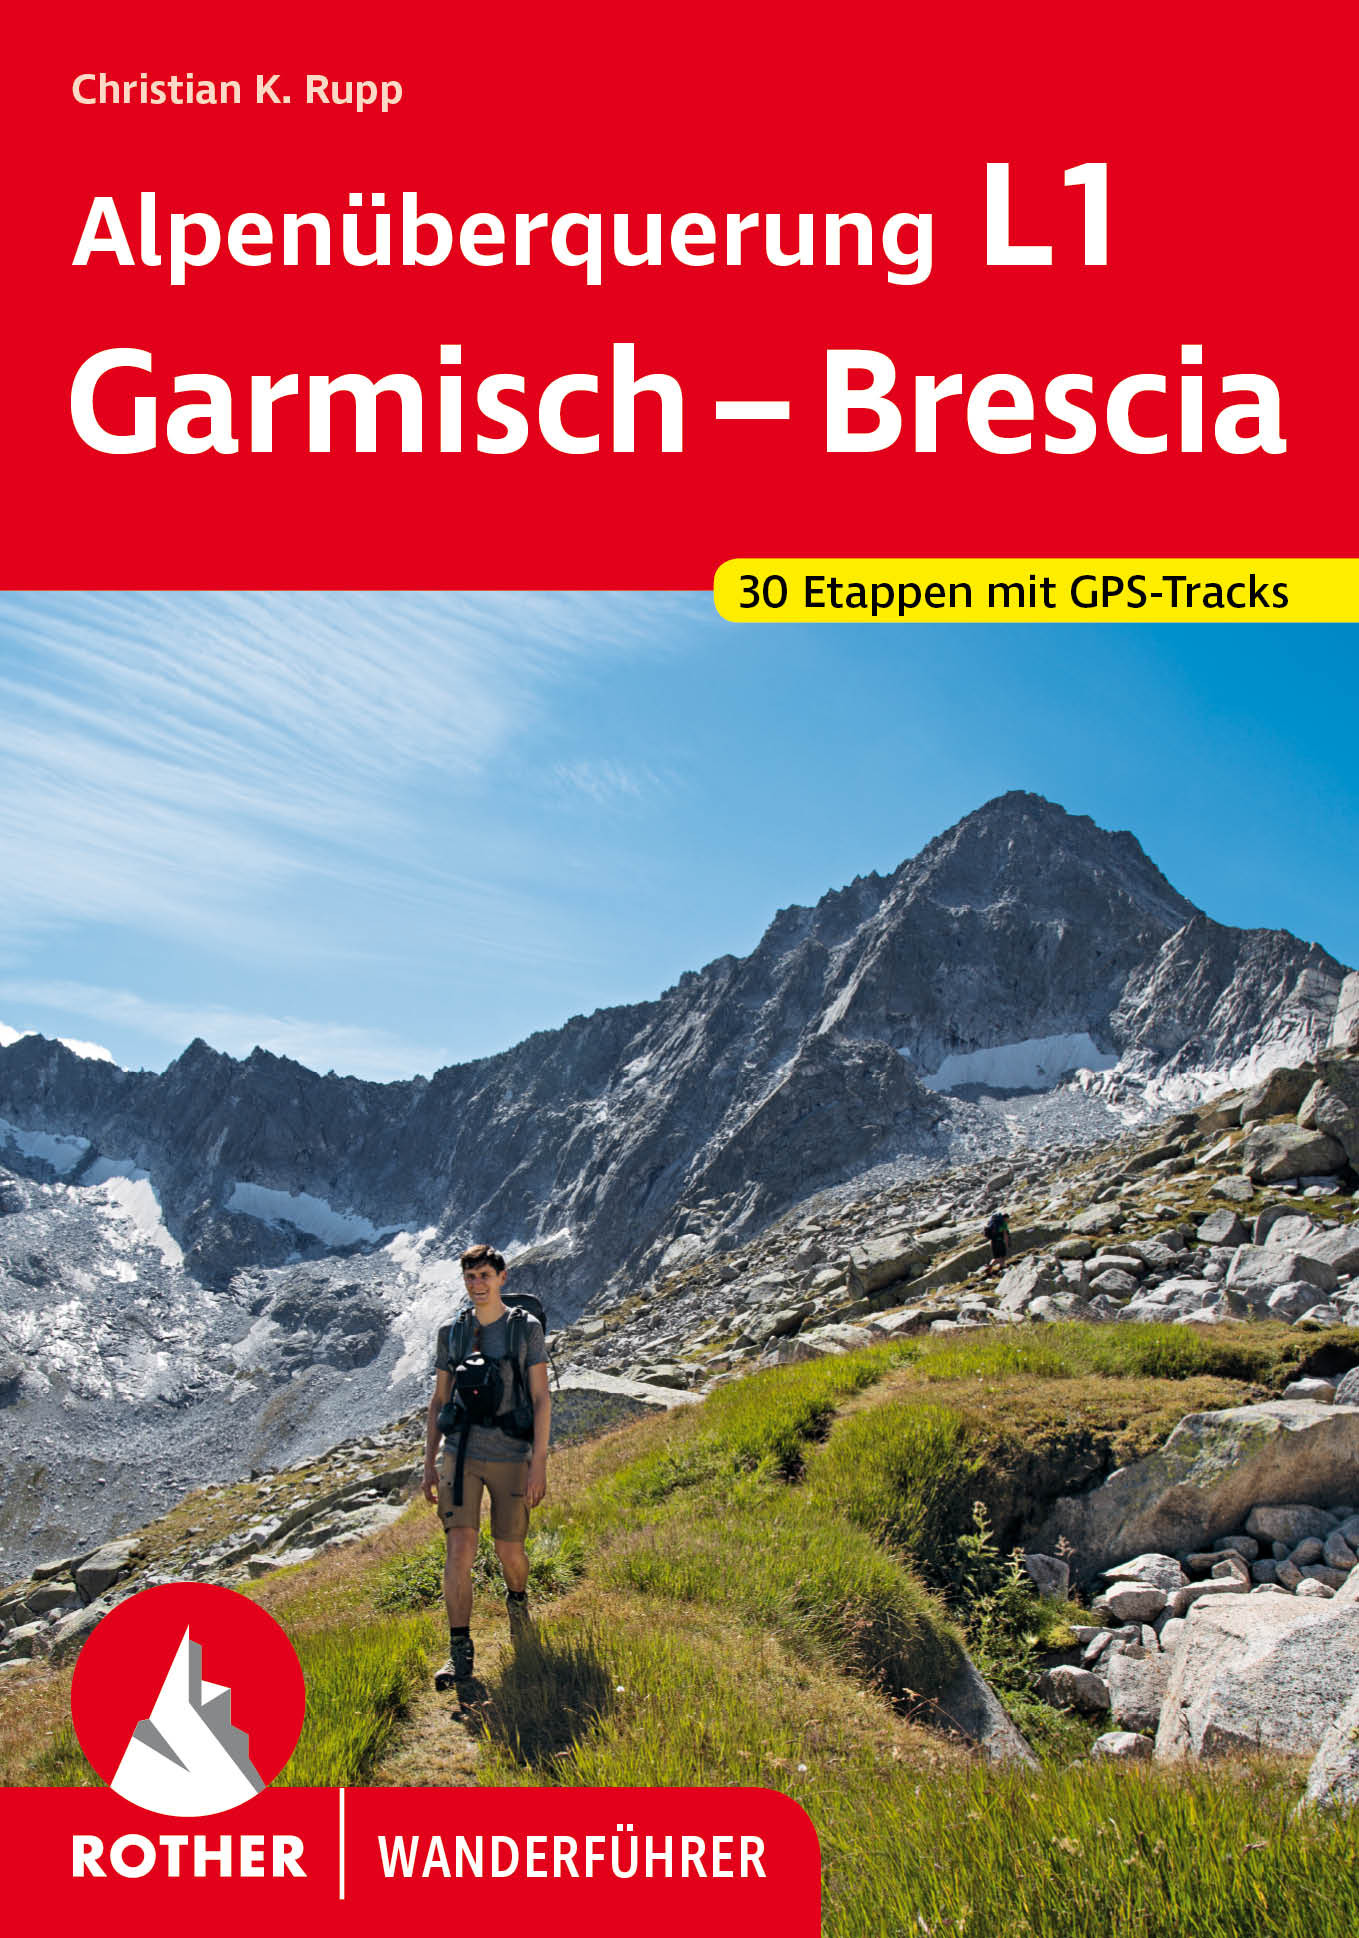 Online bestellen: Wandelgids Alpenüberquerung L1 Garmisch - Brescia | Rother Bergverlag